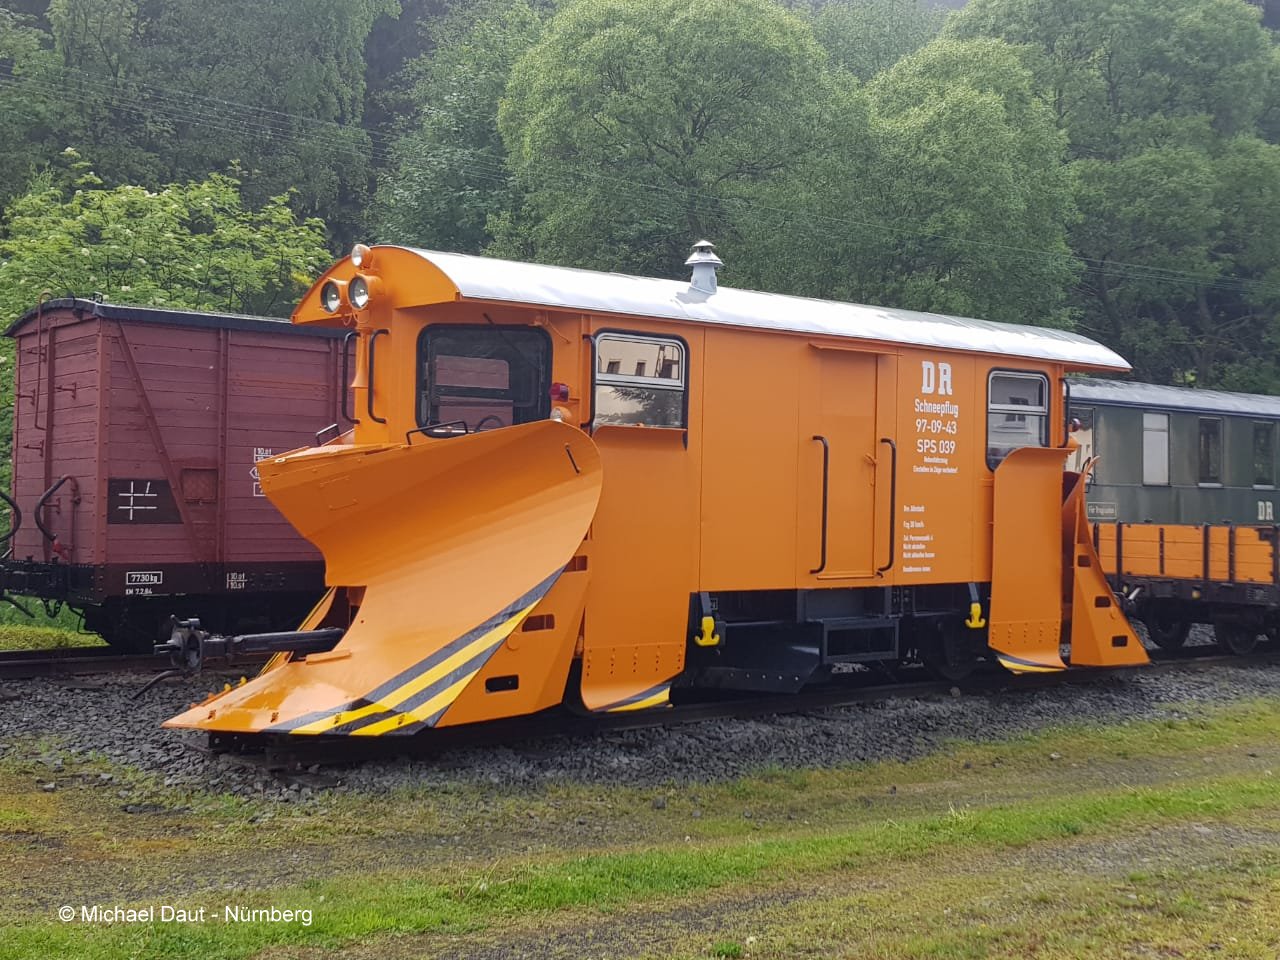 lssel stand am 19. Mai 2018 der DR Schneepflug 97-09-43 nebst orangem Ladegutwagen fr Hilfsgter oder Betriebsstoffe.